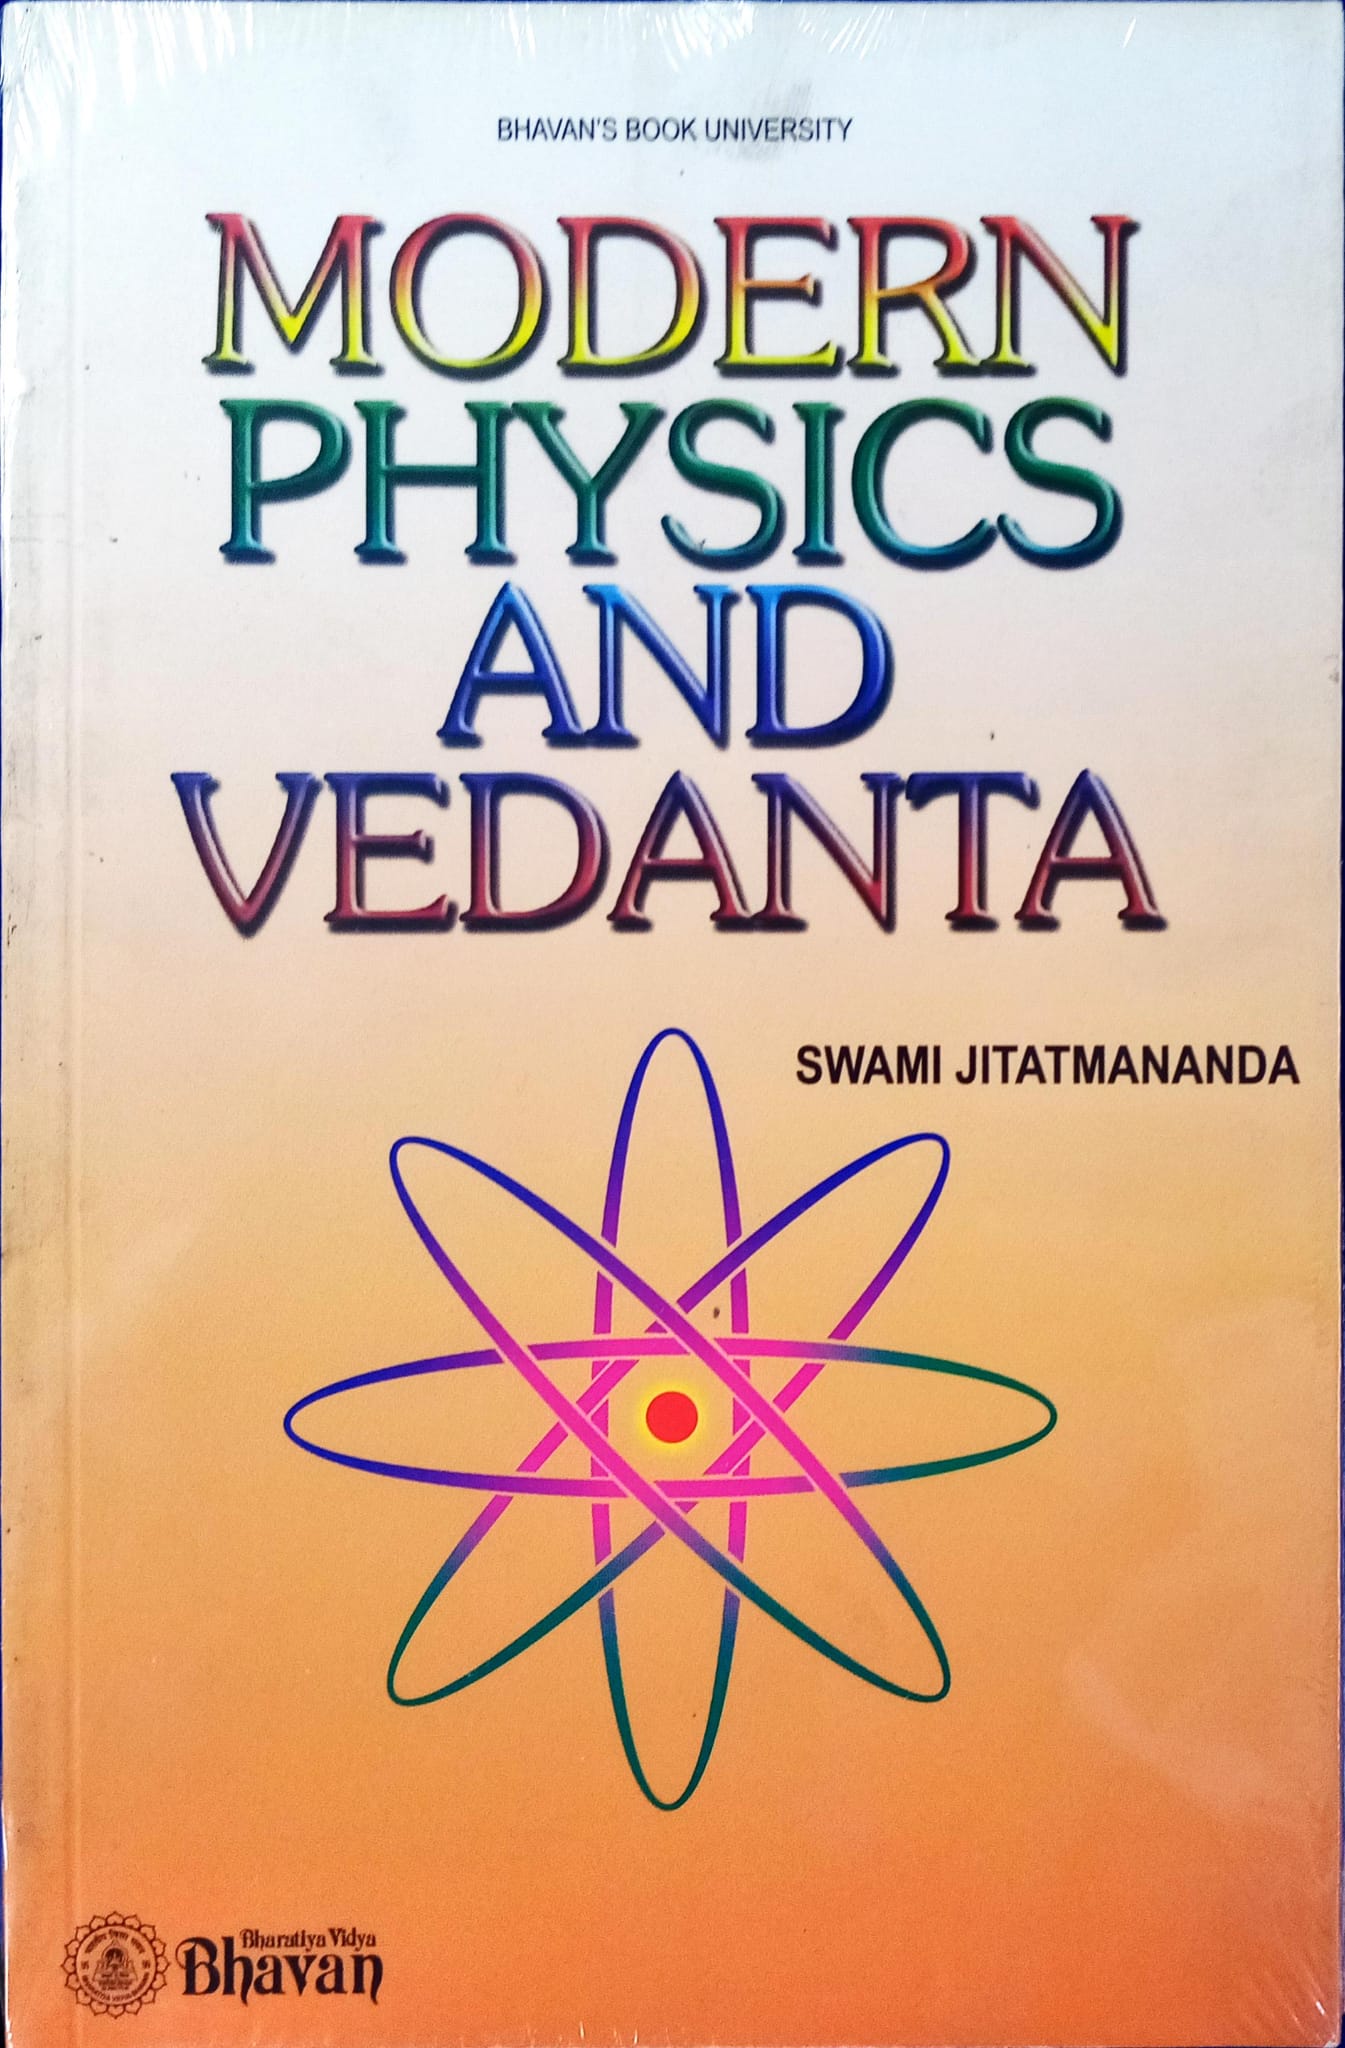 Modern Physics and Vedanta